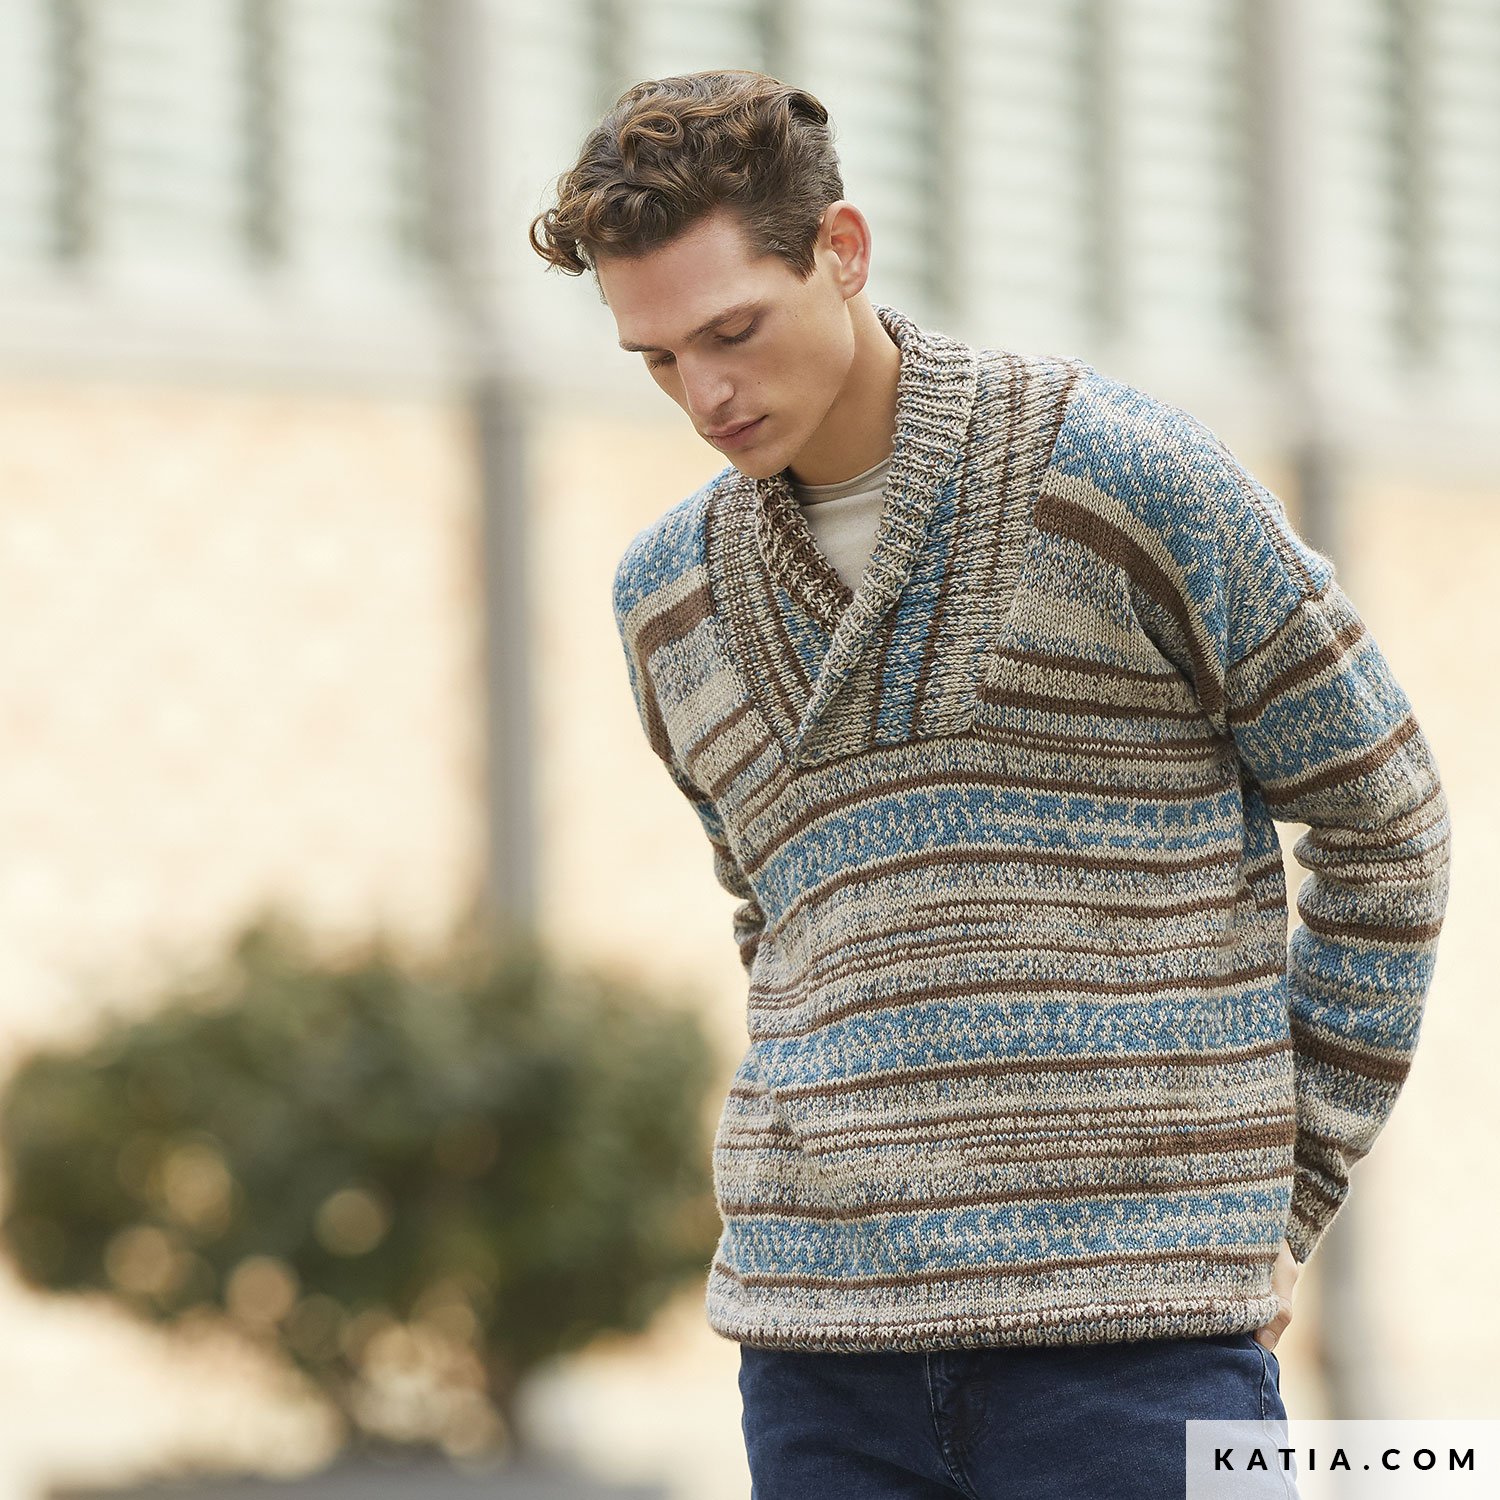 Homme Mitaines pure laine de mouton 100% naturelle handknitted Style Rustique Craft 